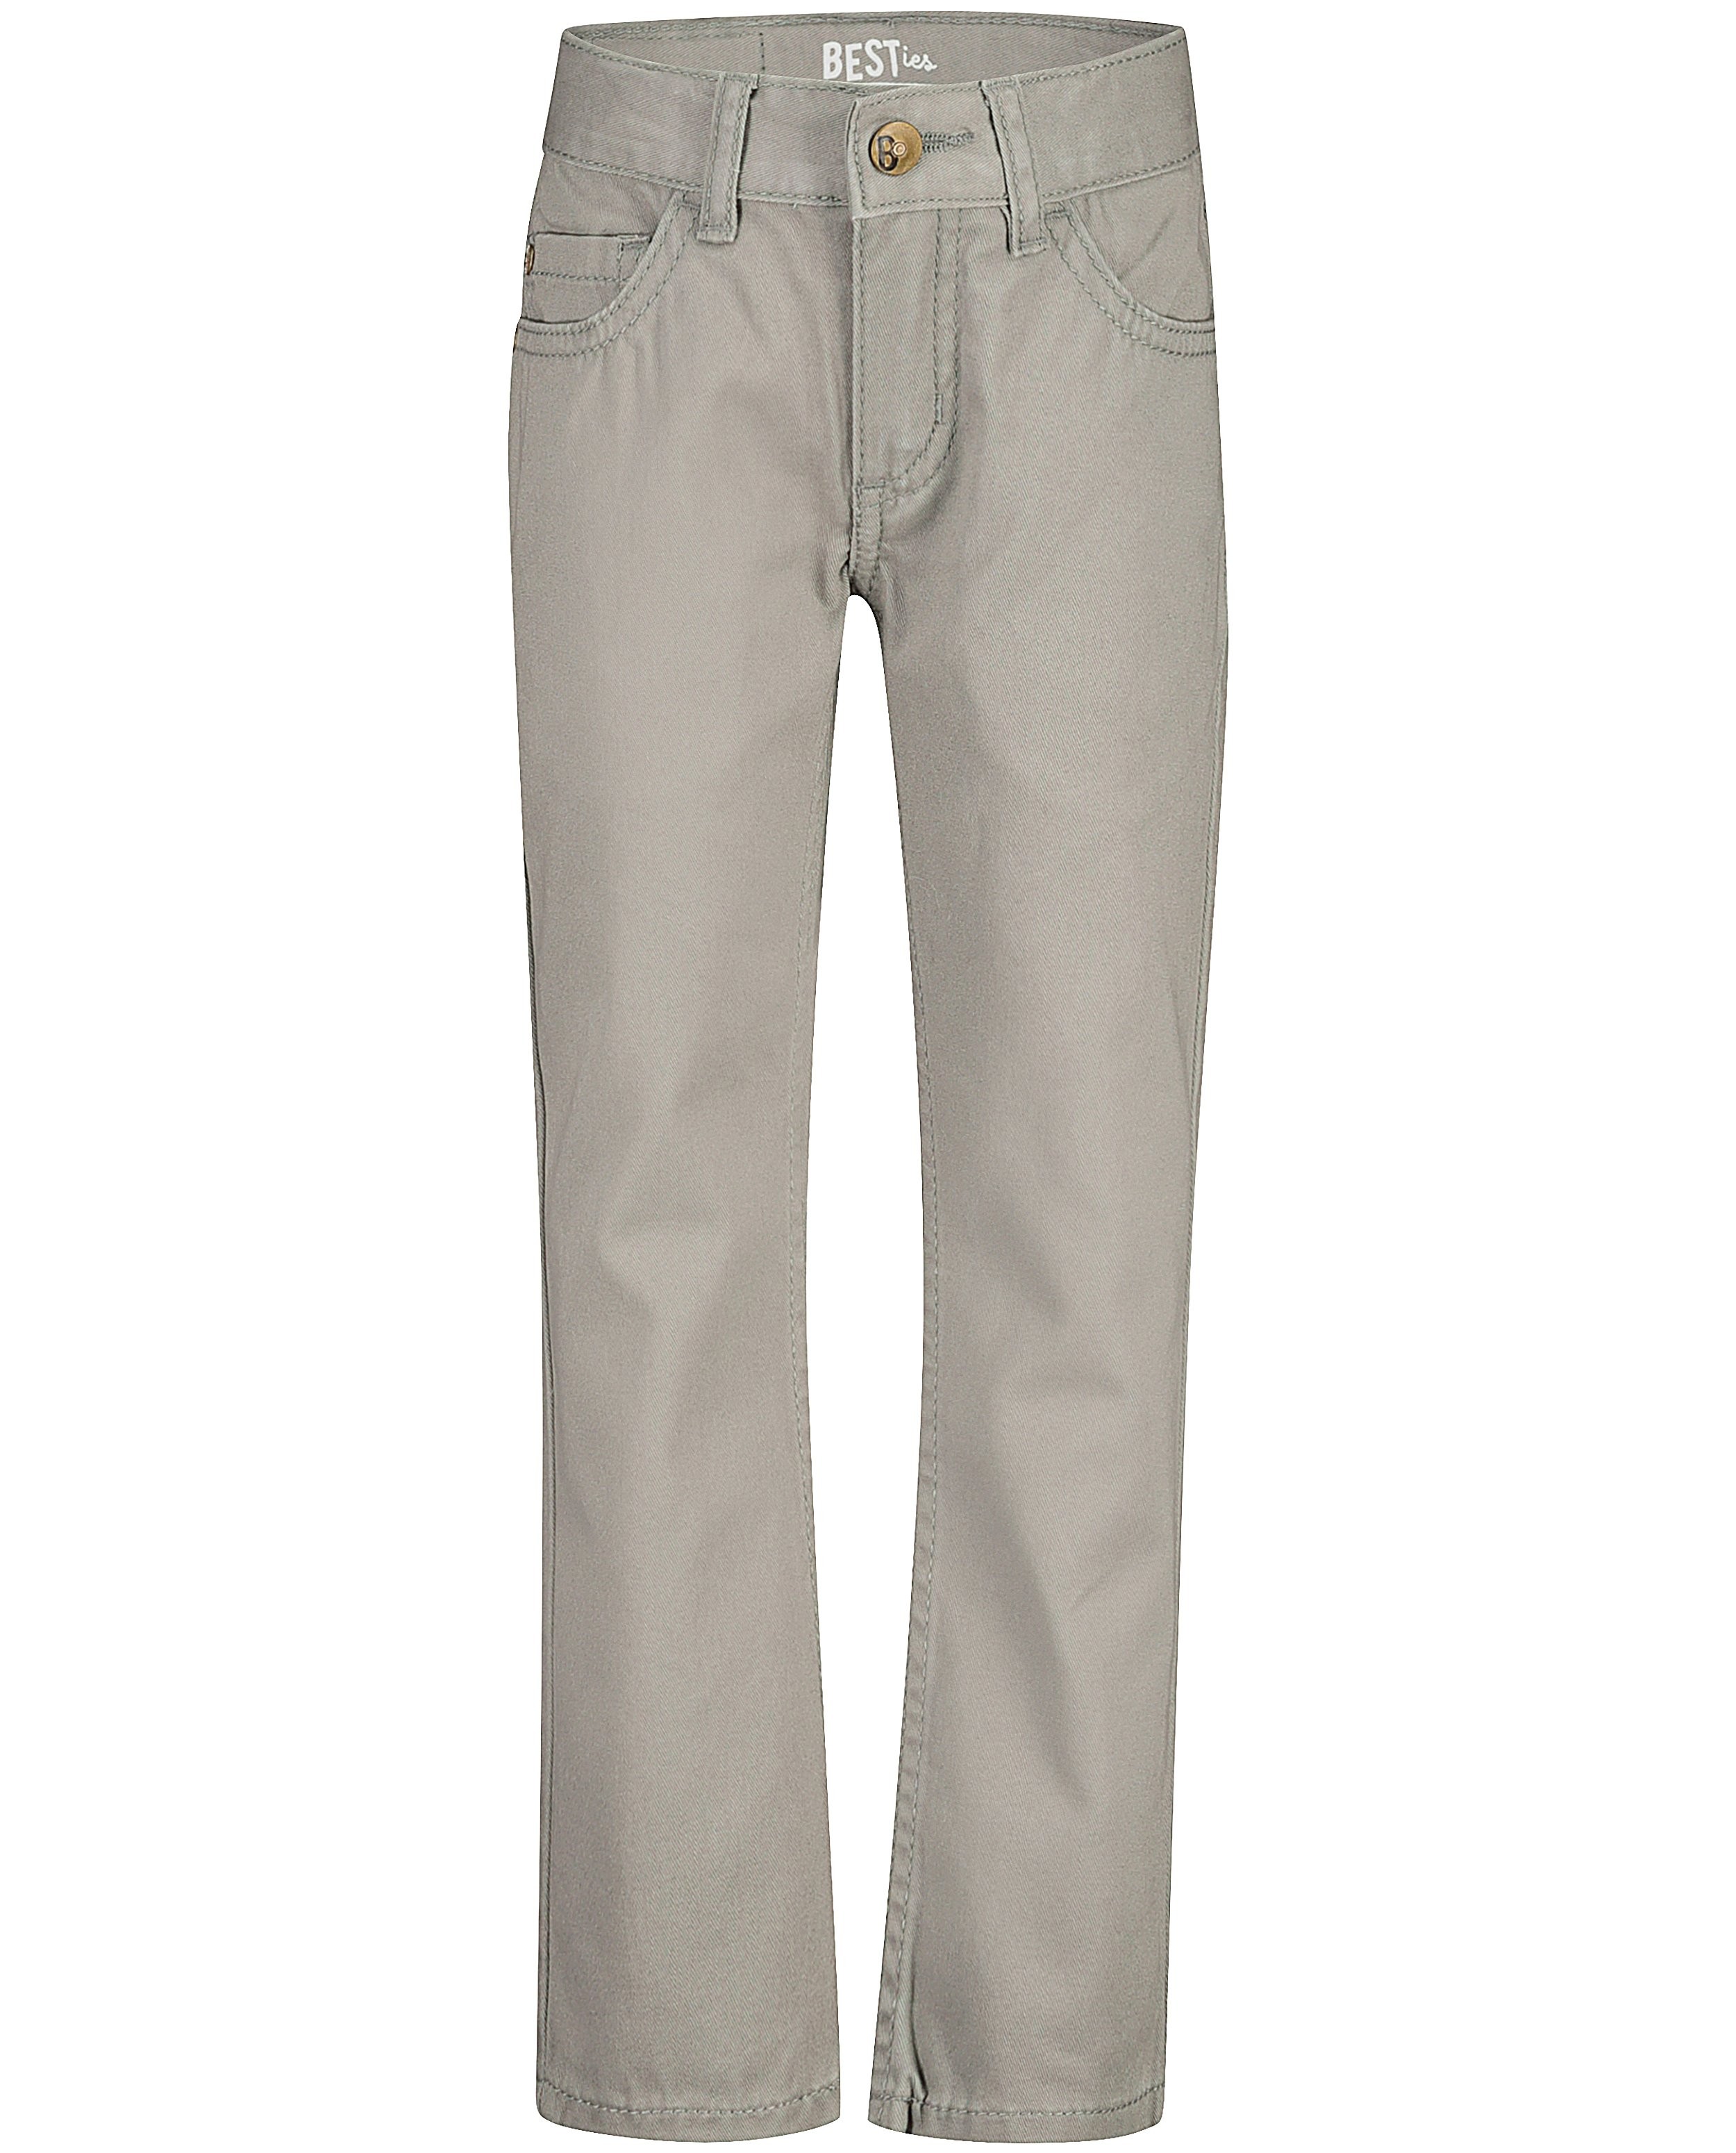 Pantalons - Jeans slim SIMON BESTies 2-7 ans